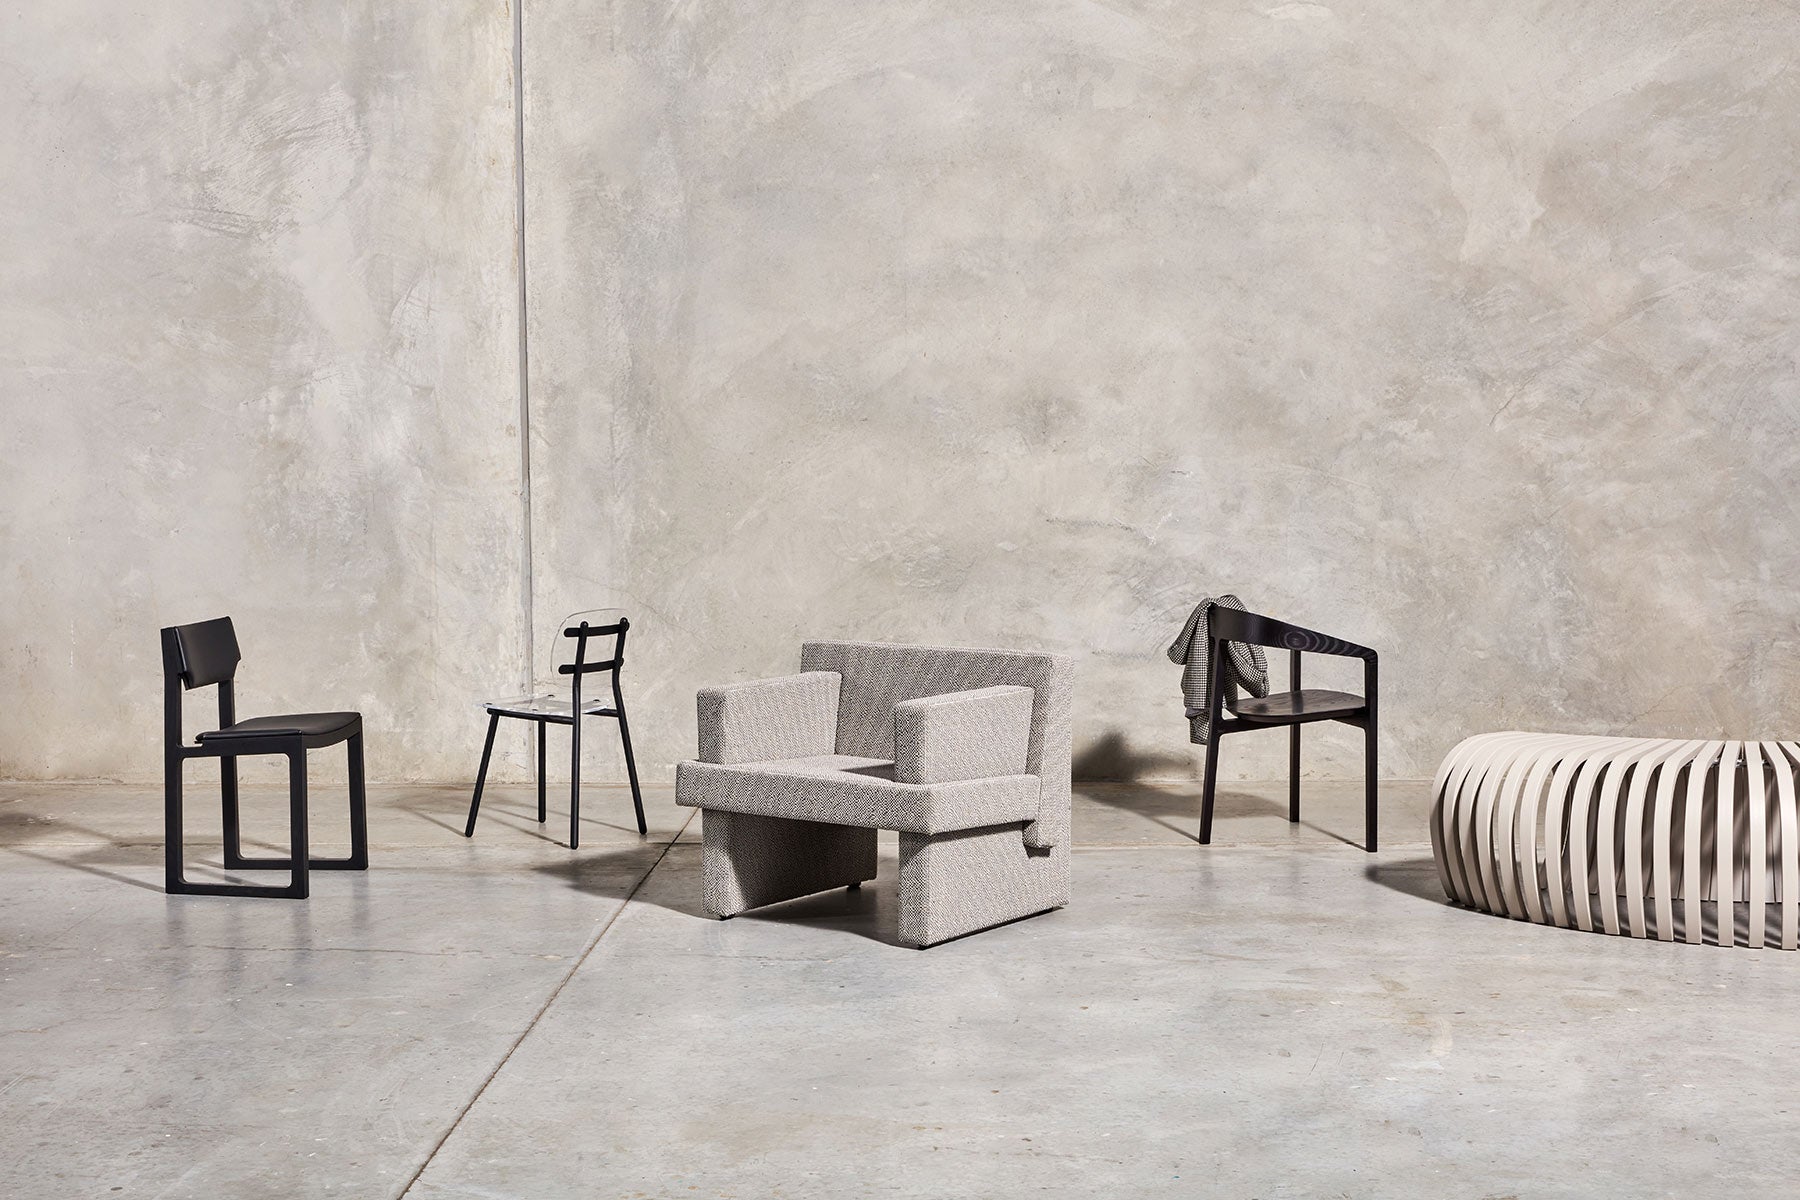 Fenster Chair | Black and White Furniture | DesignByThem | Gallery